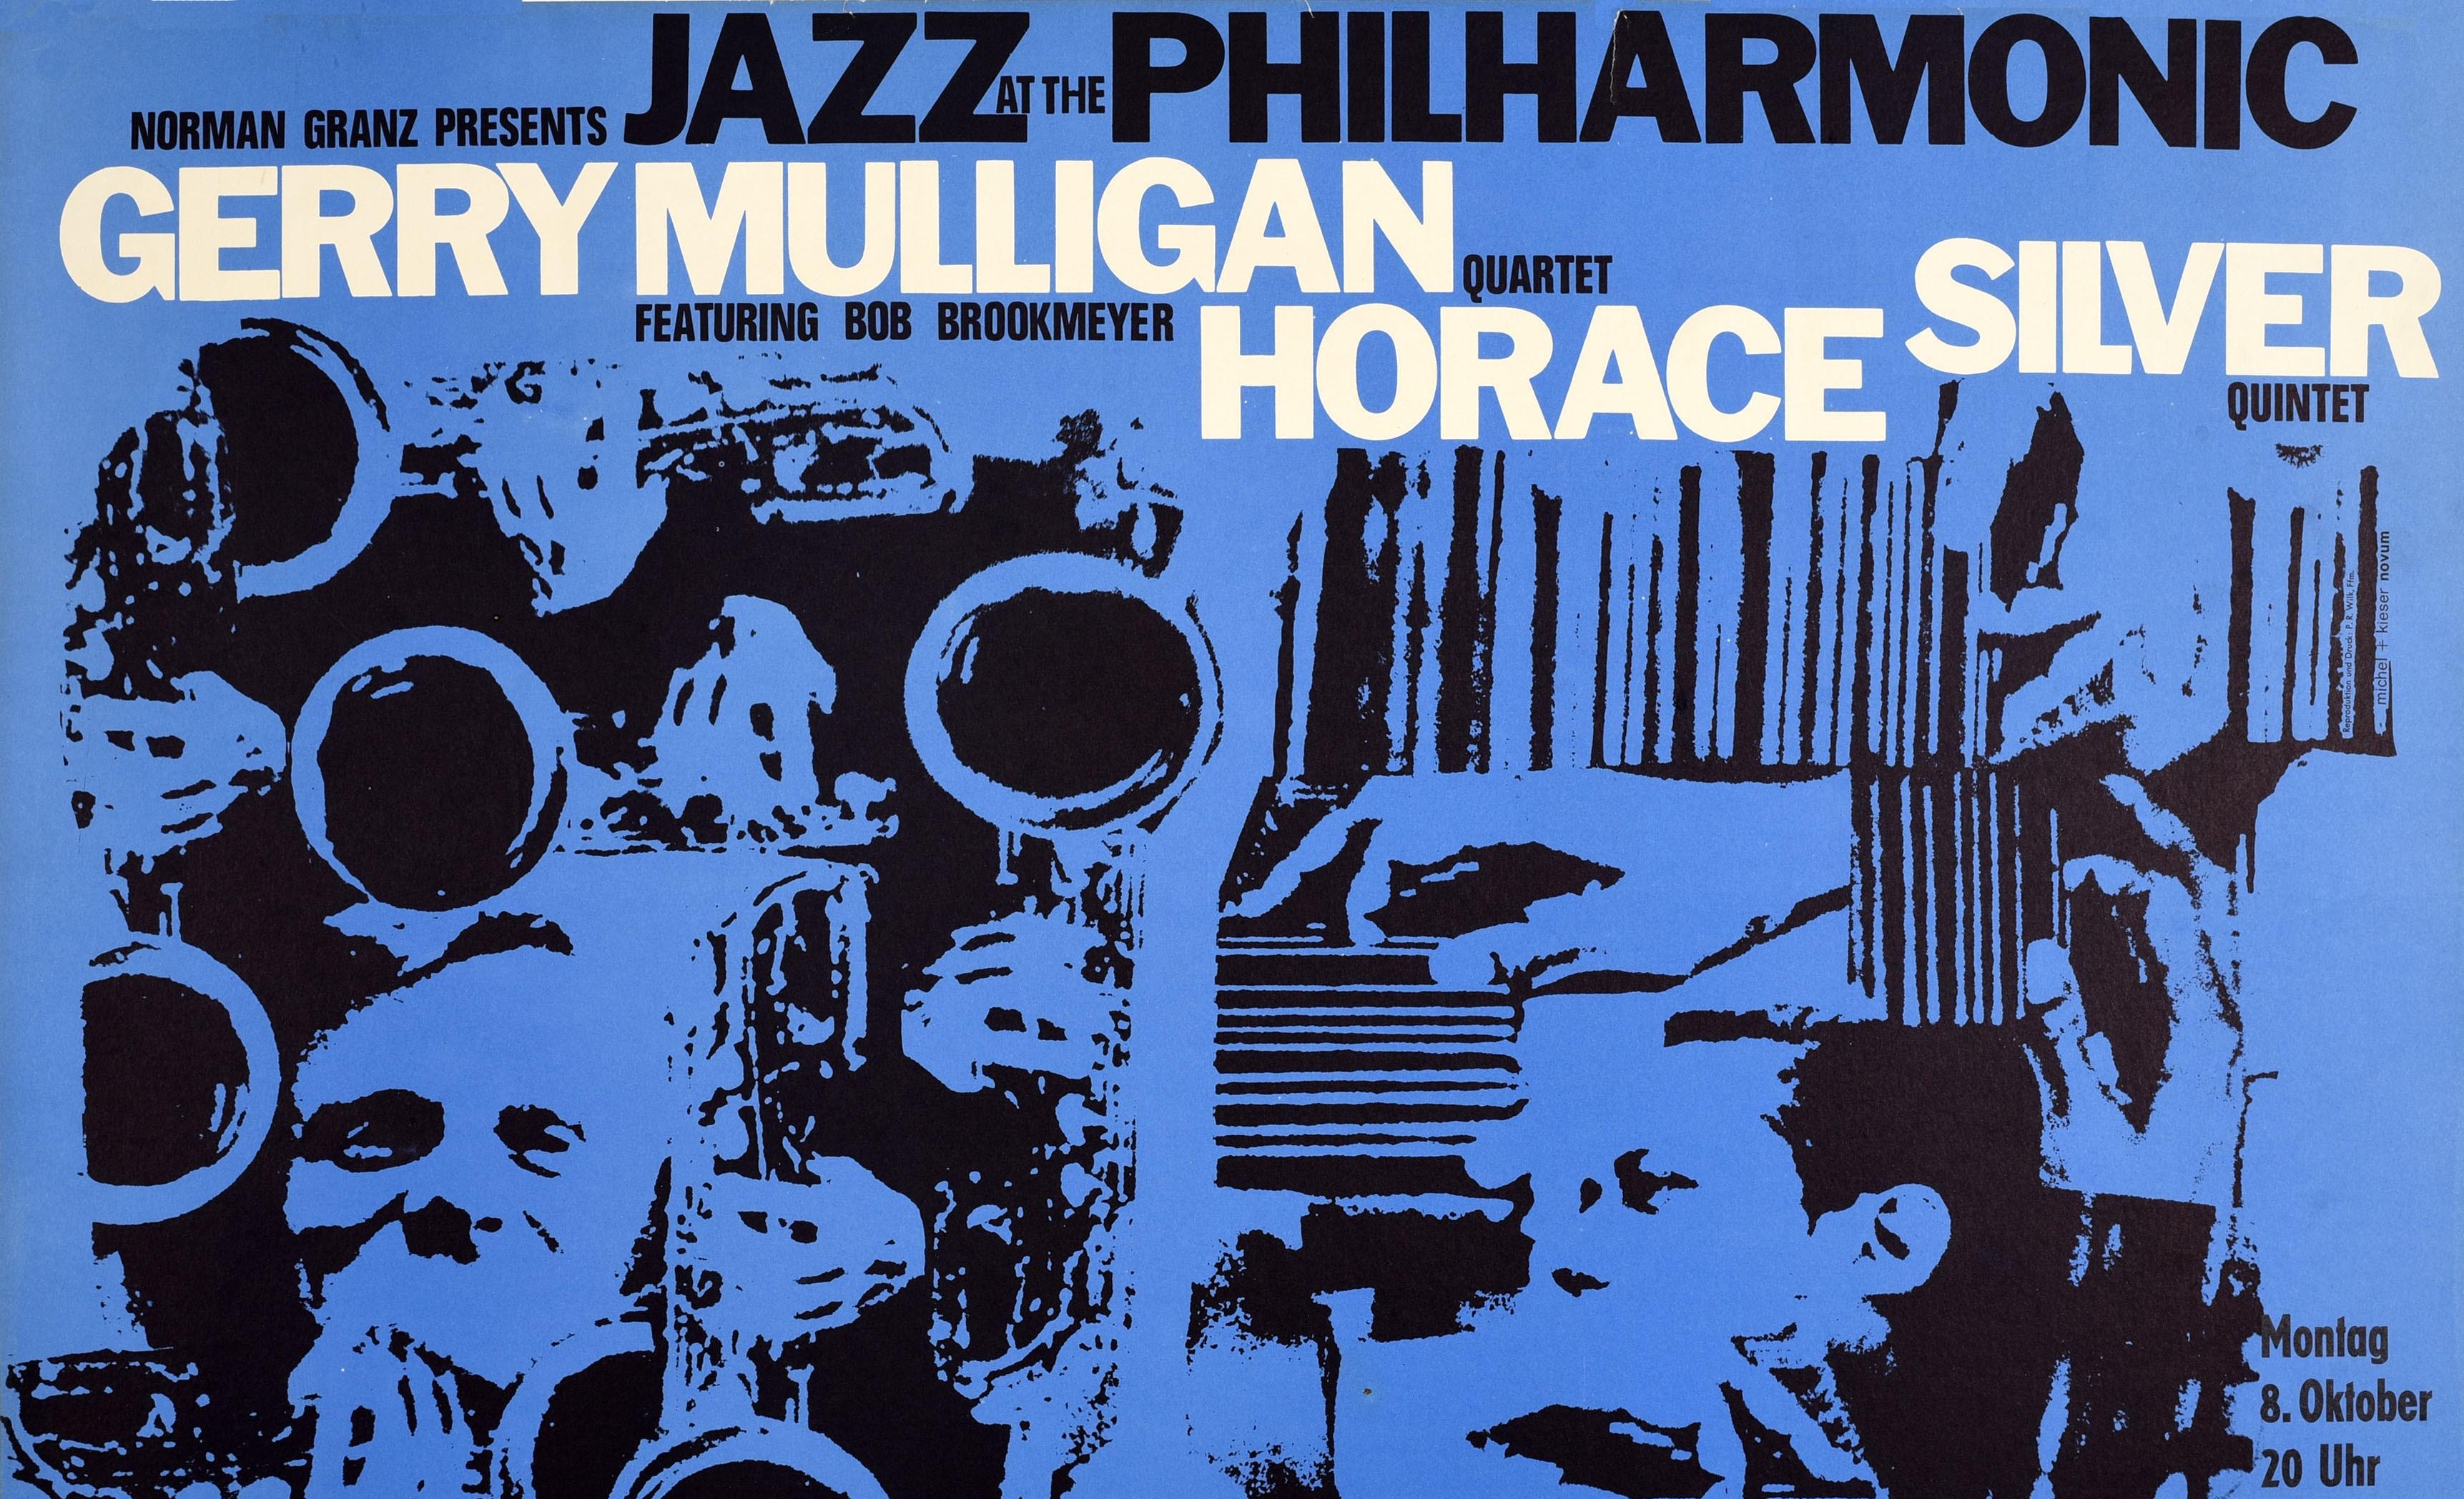 Original Vintage Music Poster Norman Granz Presents Jazz At The Philharmonic Art - Print by Günther Kieser